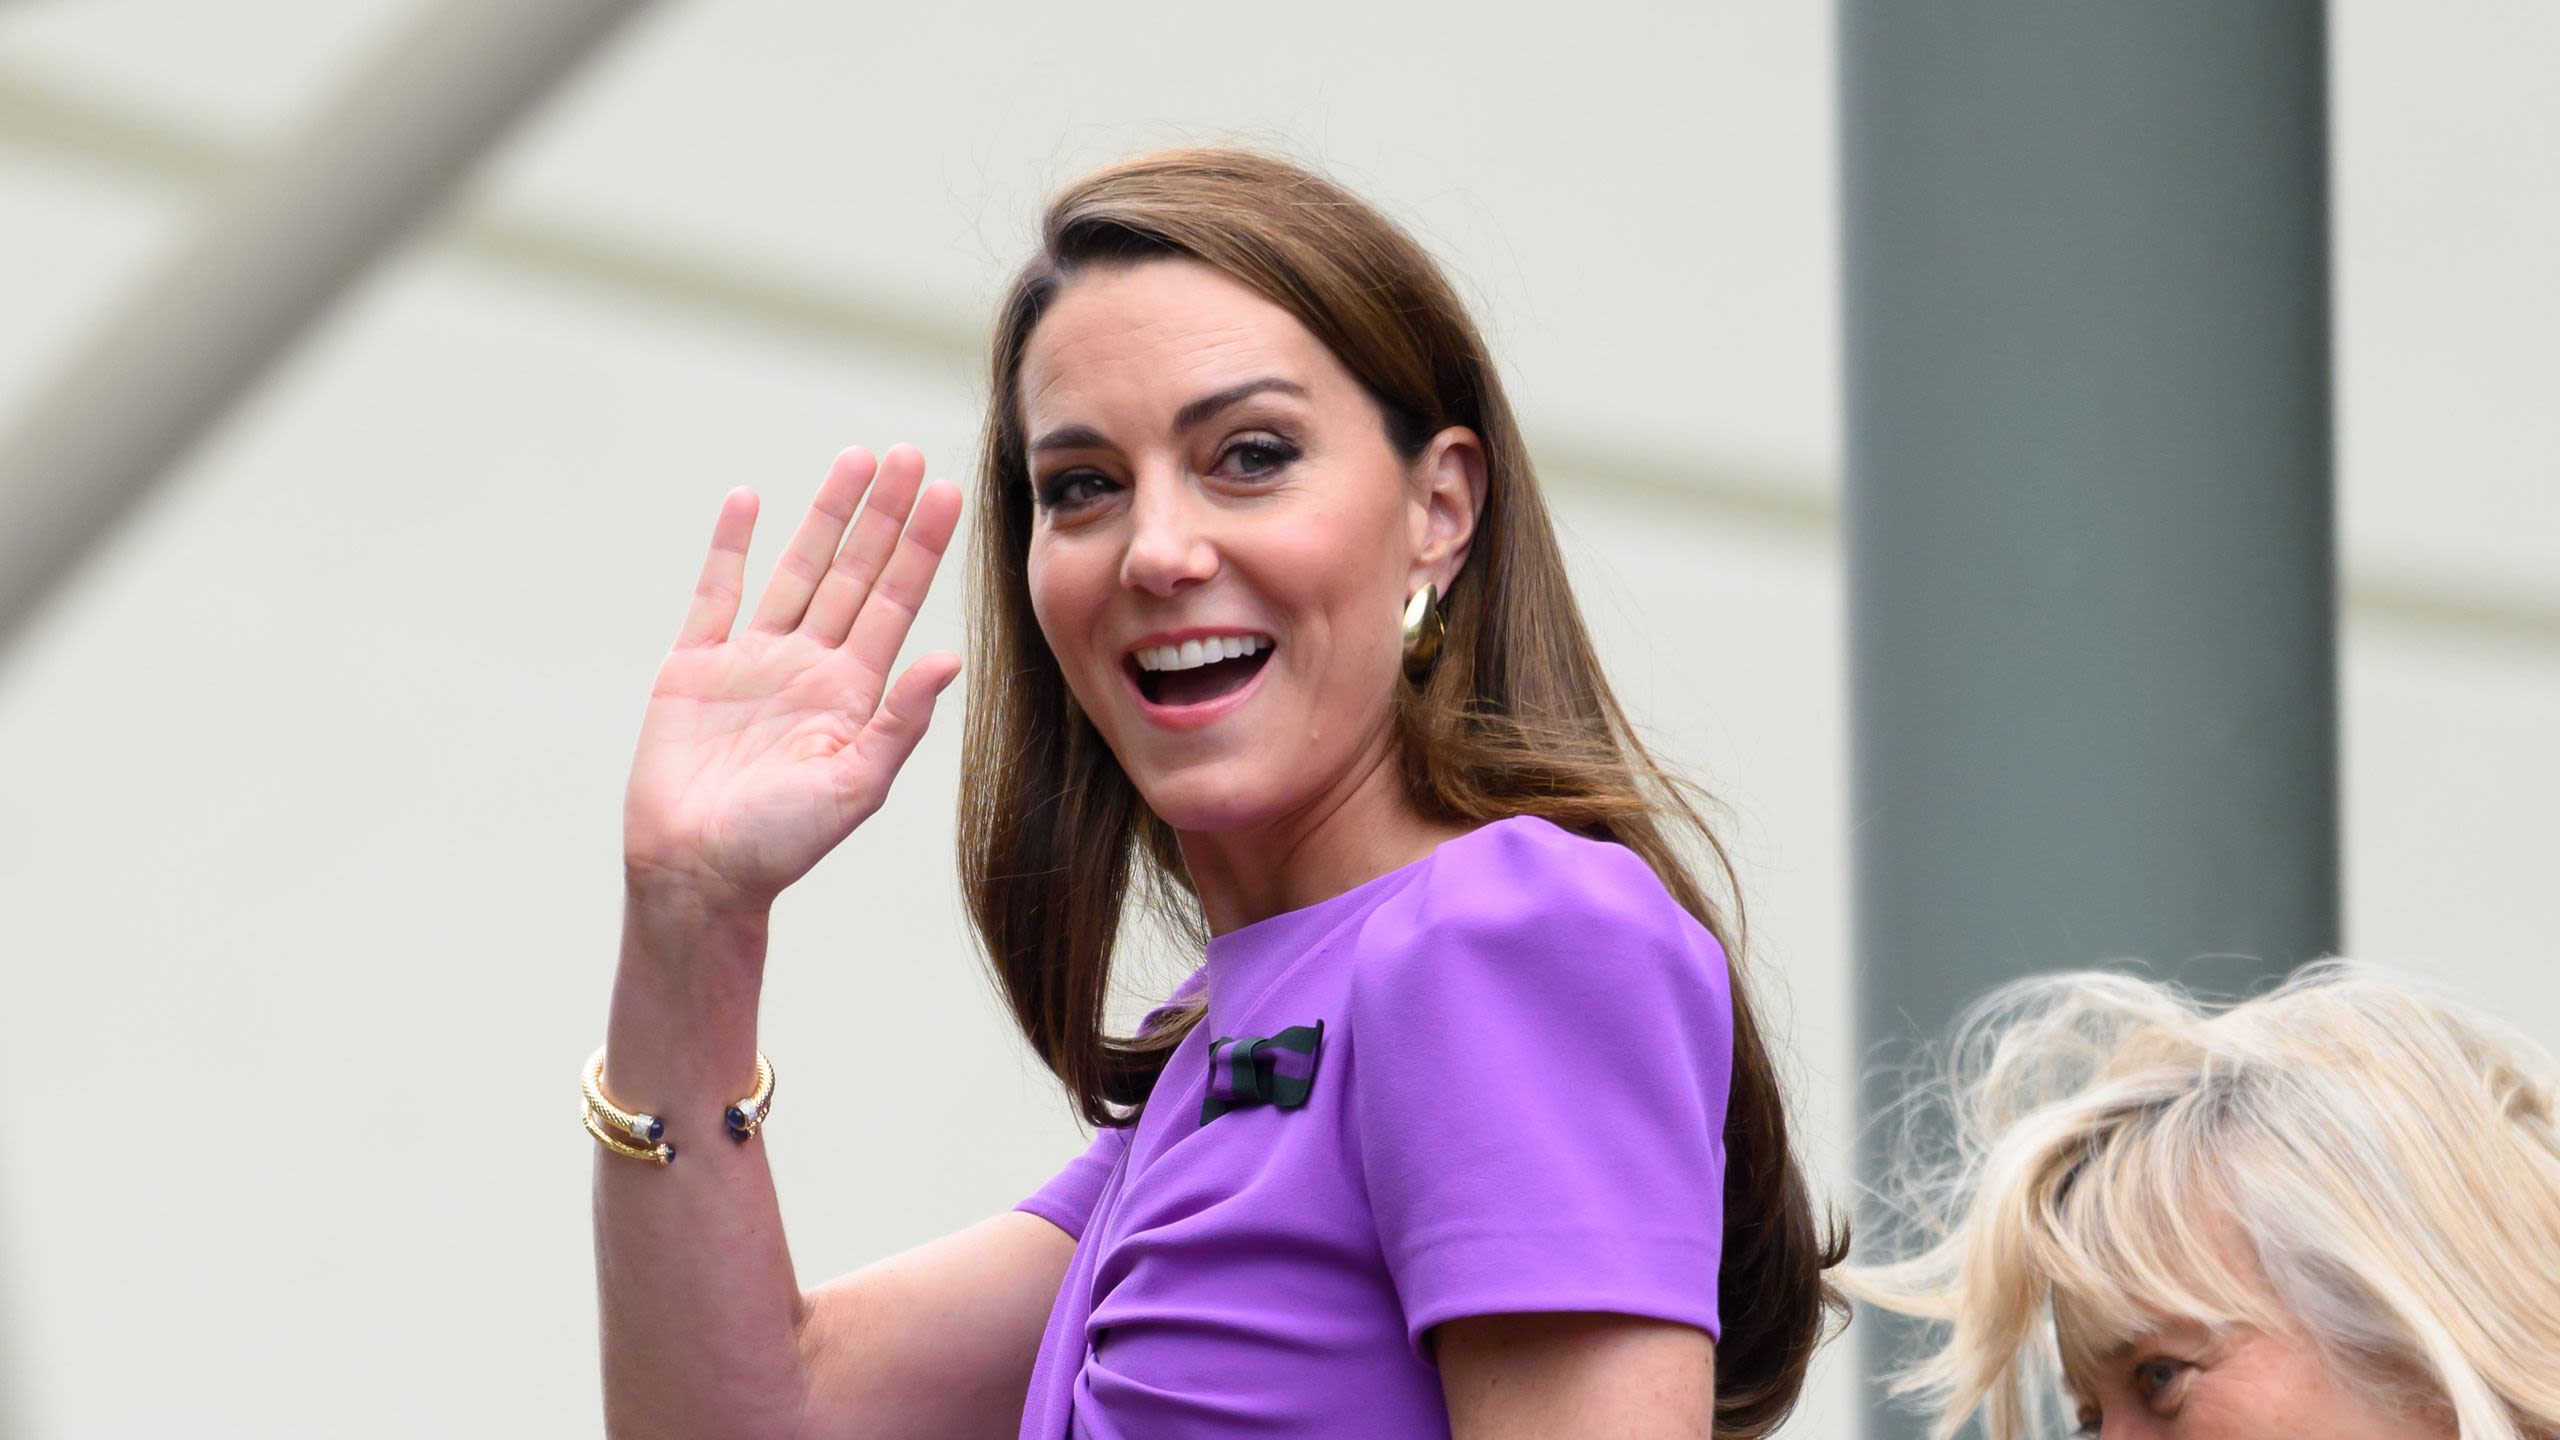 A Body Language Expert Reveals Kate Middleton's 3 "Tells" at Wimbledon